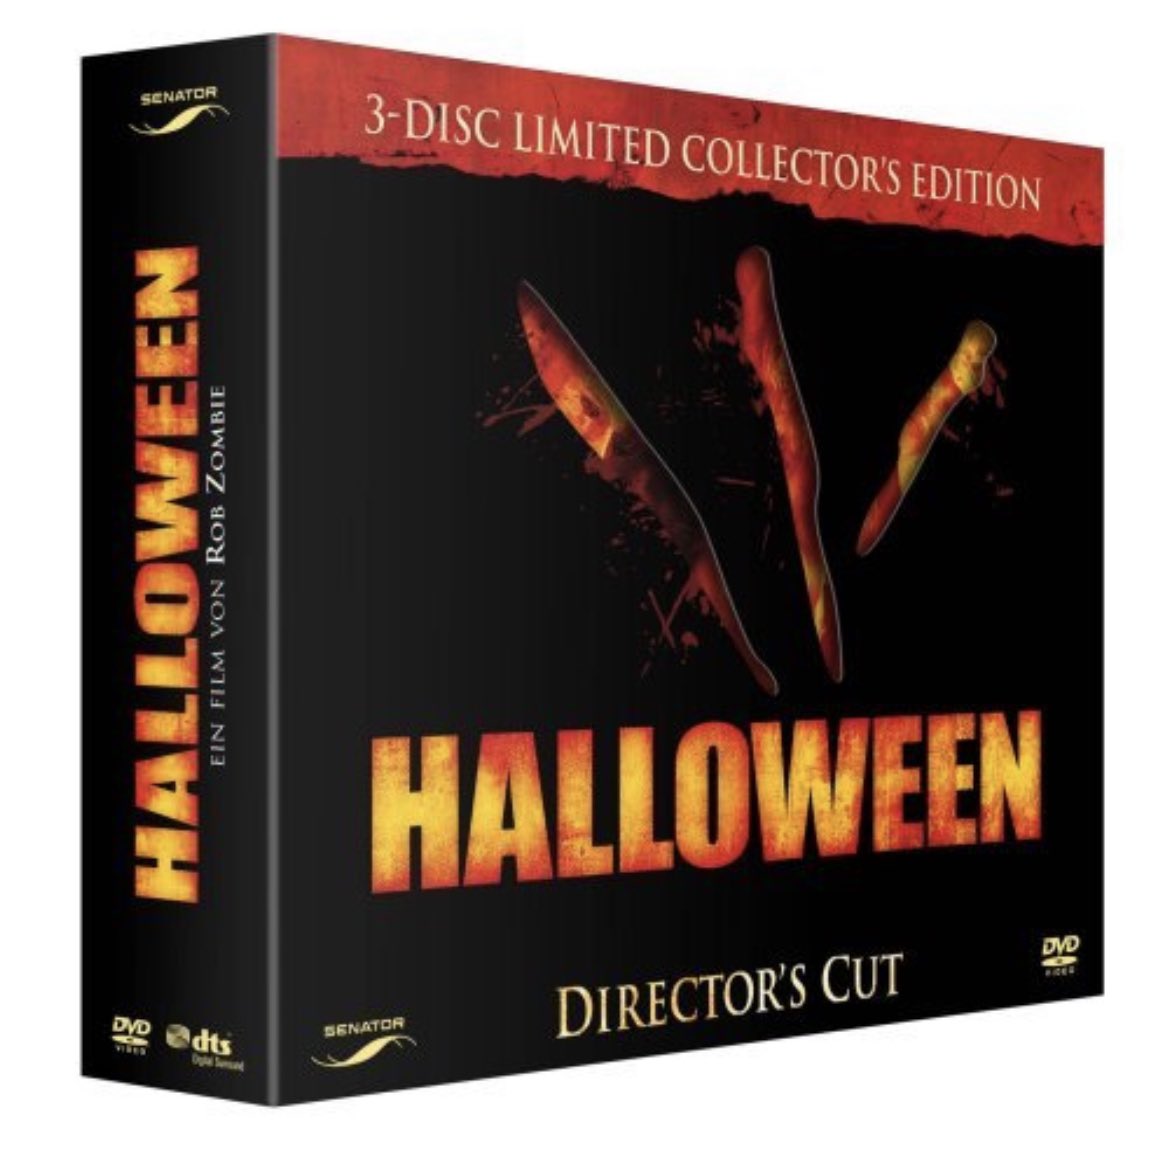 Rob Zombie's Halloween on DVD & Blu-ray